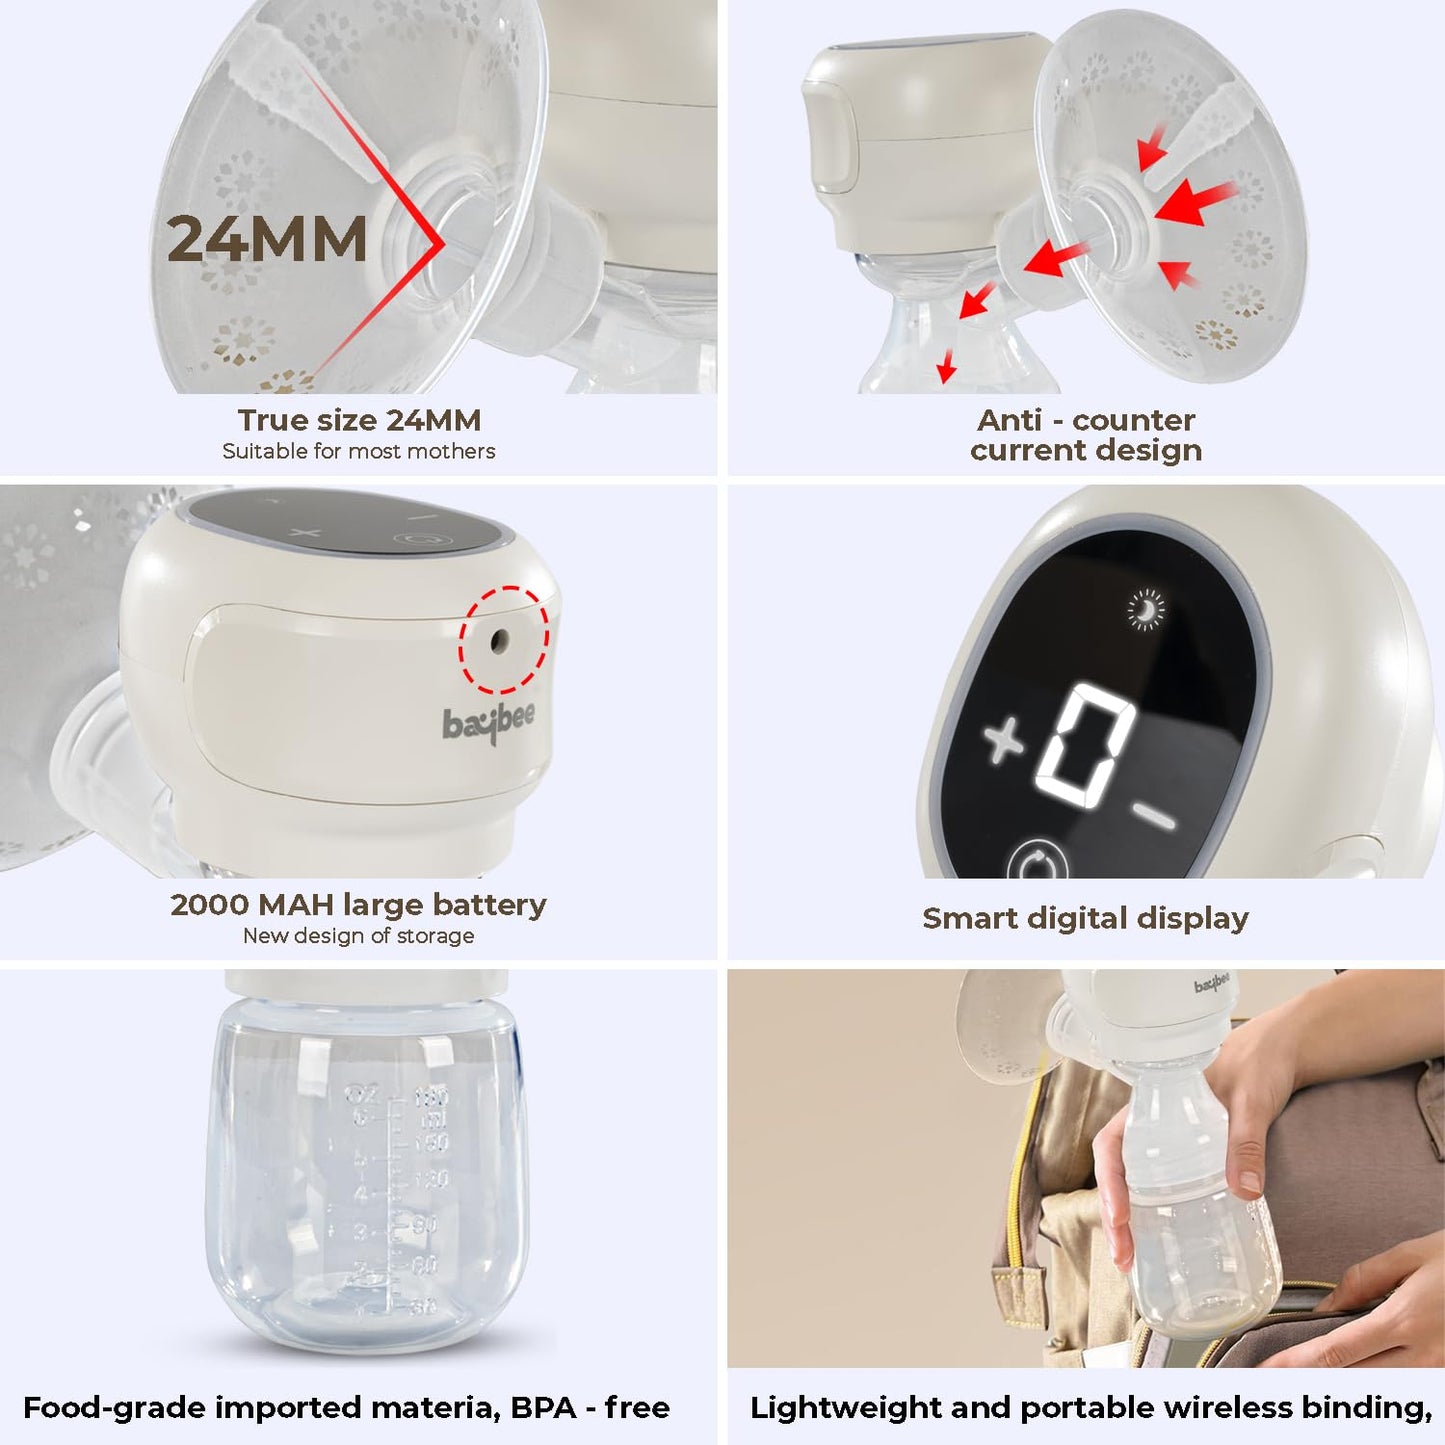 Baybee Smart Electric Breast Pump for Feeding Mothers, Breast Feeding Pump Electrical with Led Display